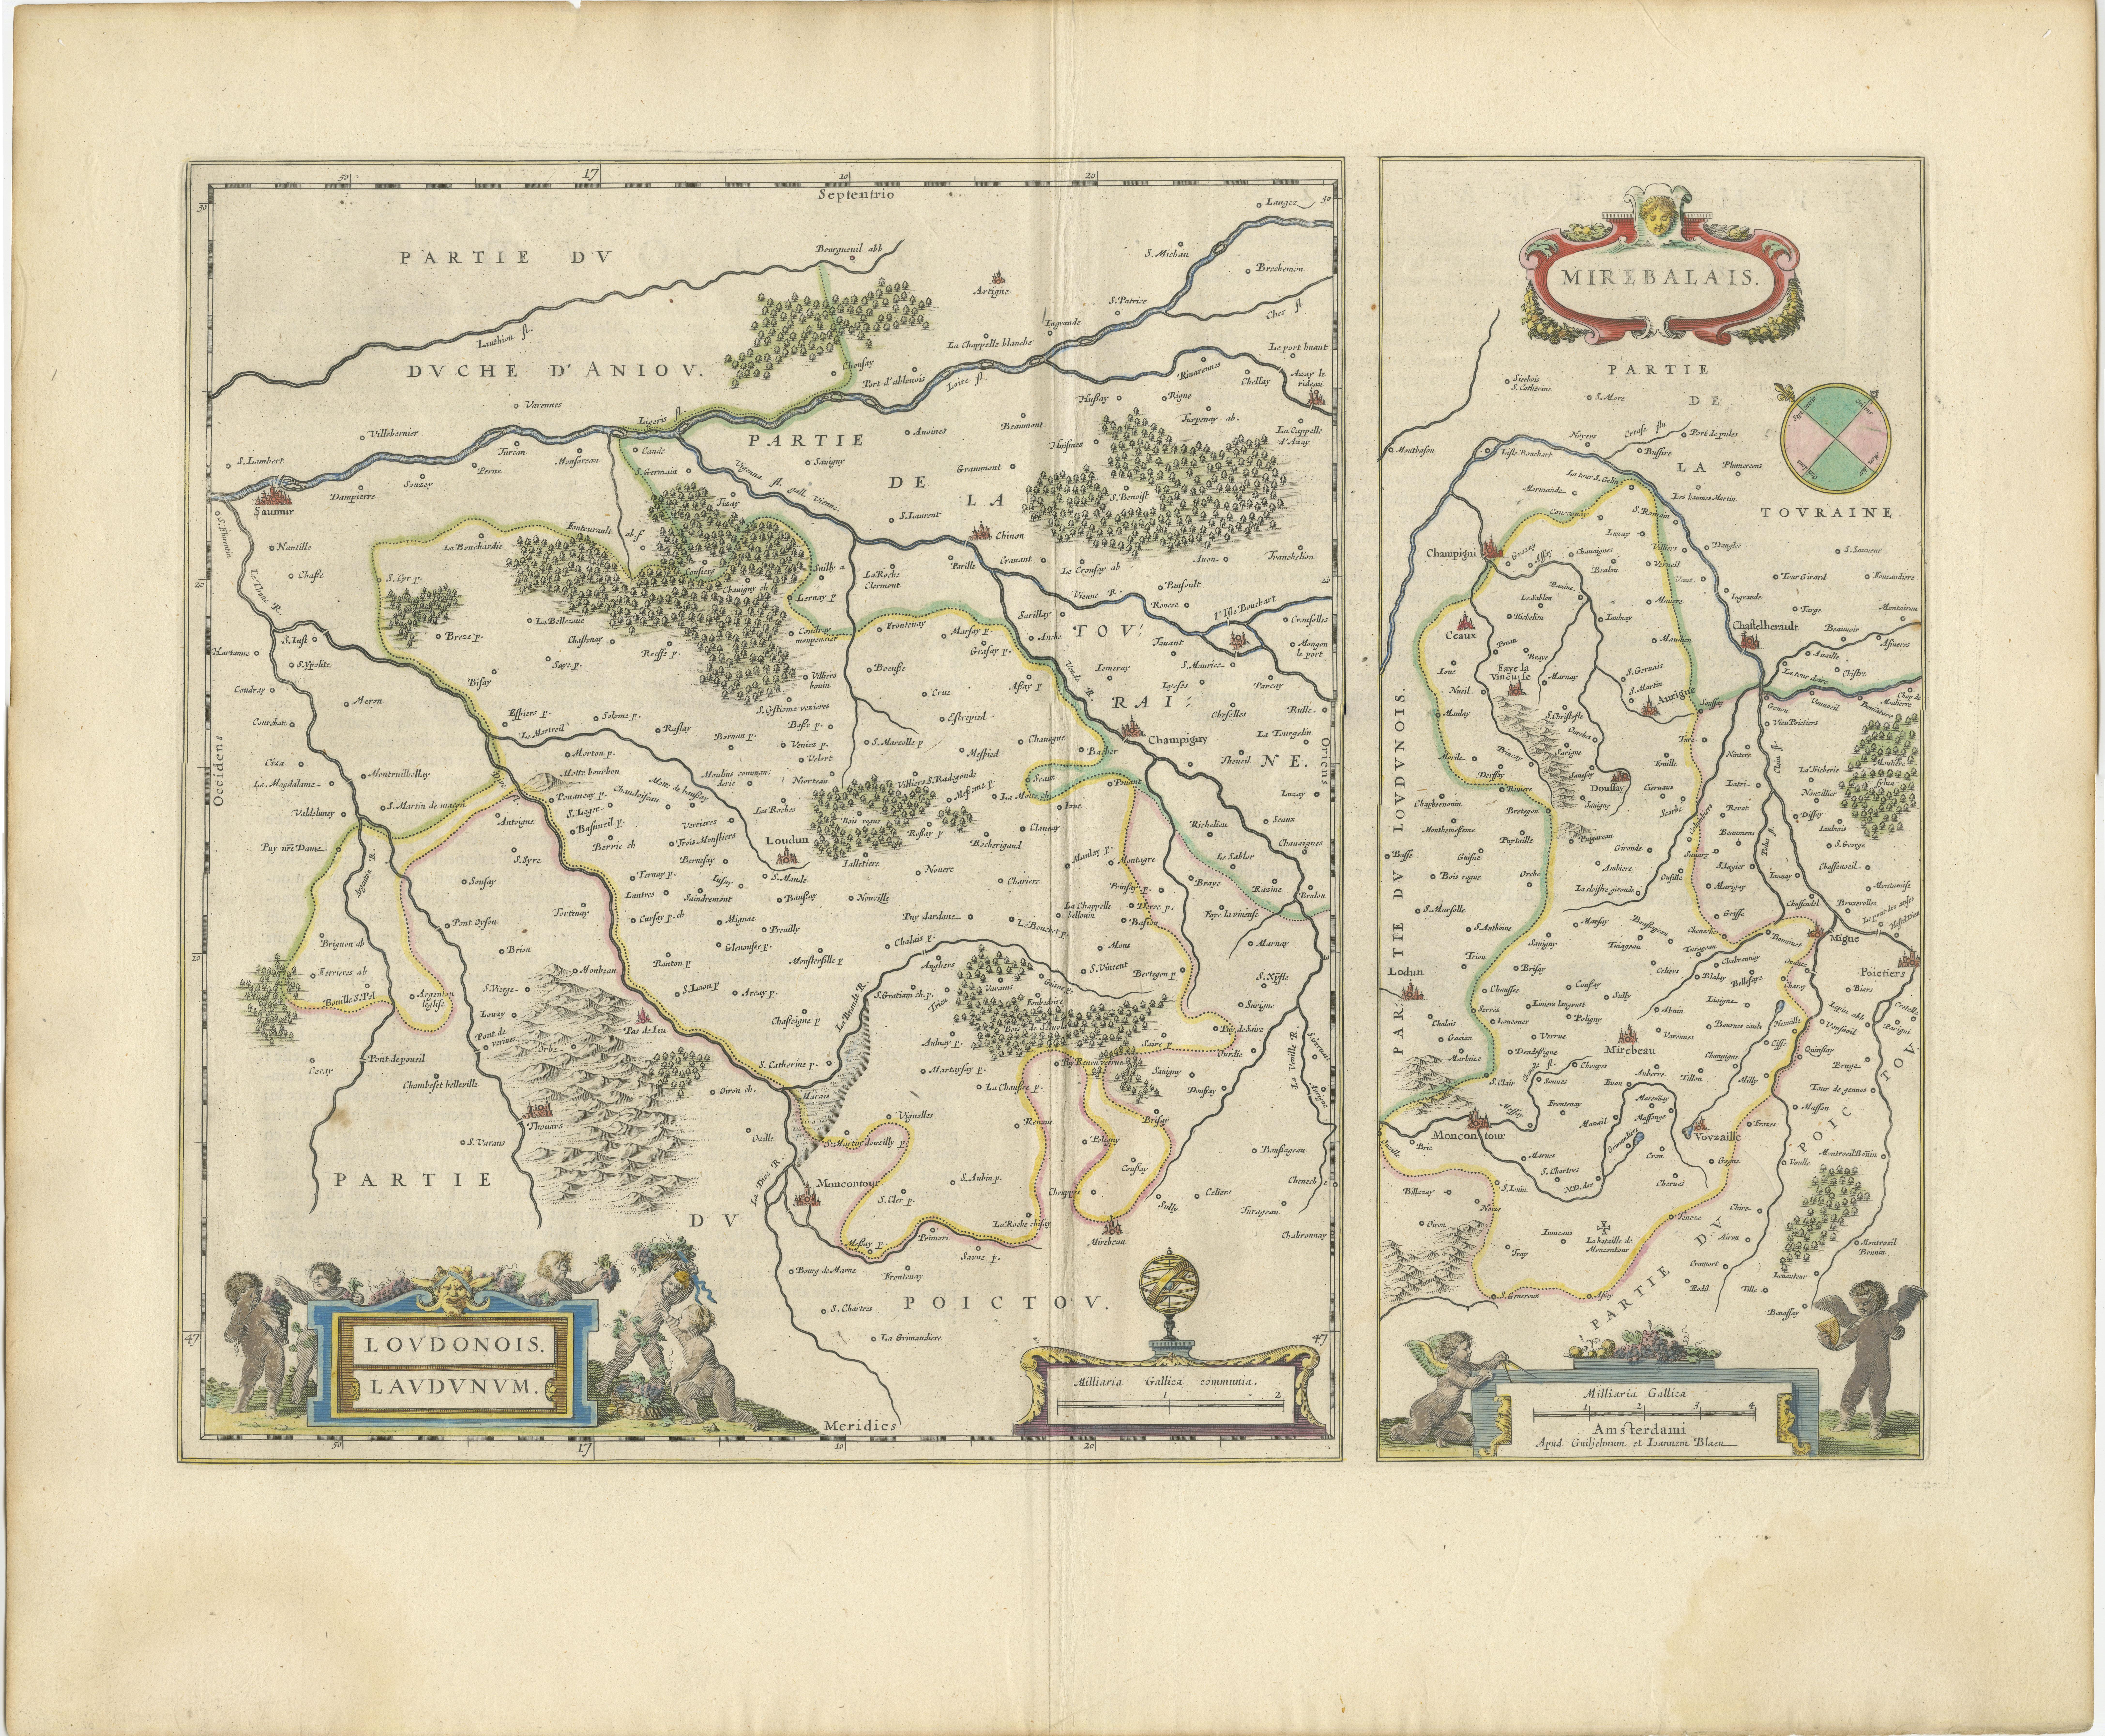 Cartographie, 17e siècle. Willem (1571-1638) et Joan Blaeu (1596-1673), Theatrum Orbis Terrarum sive Atlas Novus..., 1635. Figure : Loudonois. Laudunum (Loudun) ; Mirebalais (Mirebeau)

L'image téléchargée est un  Carte ancienne originale intitulée